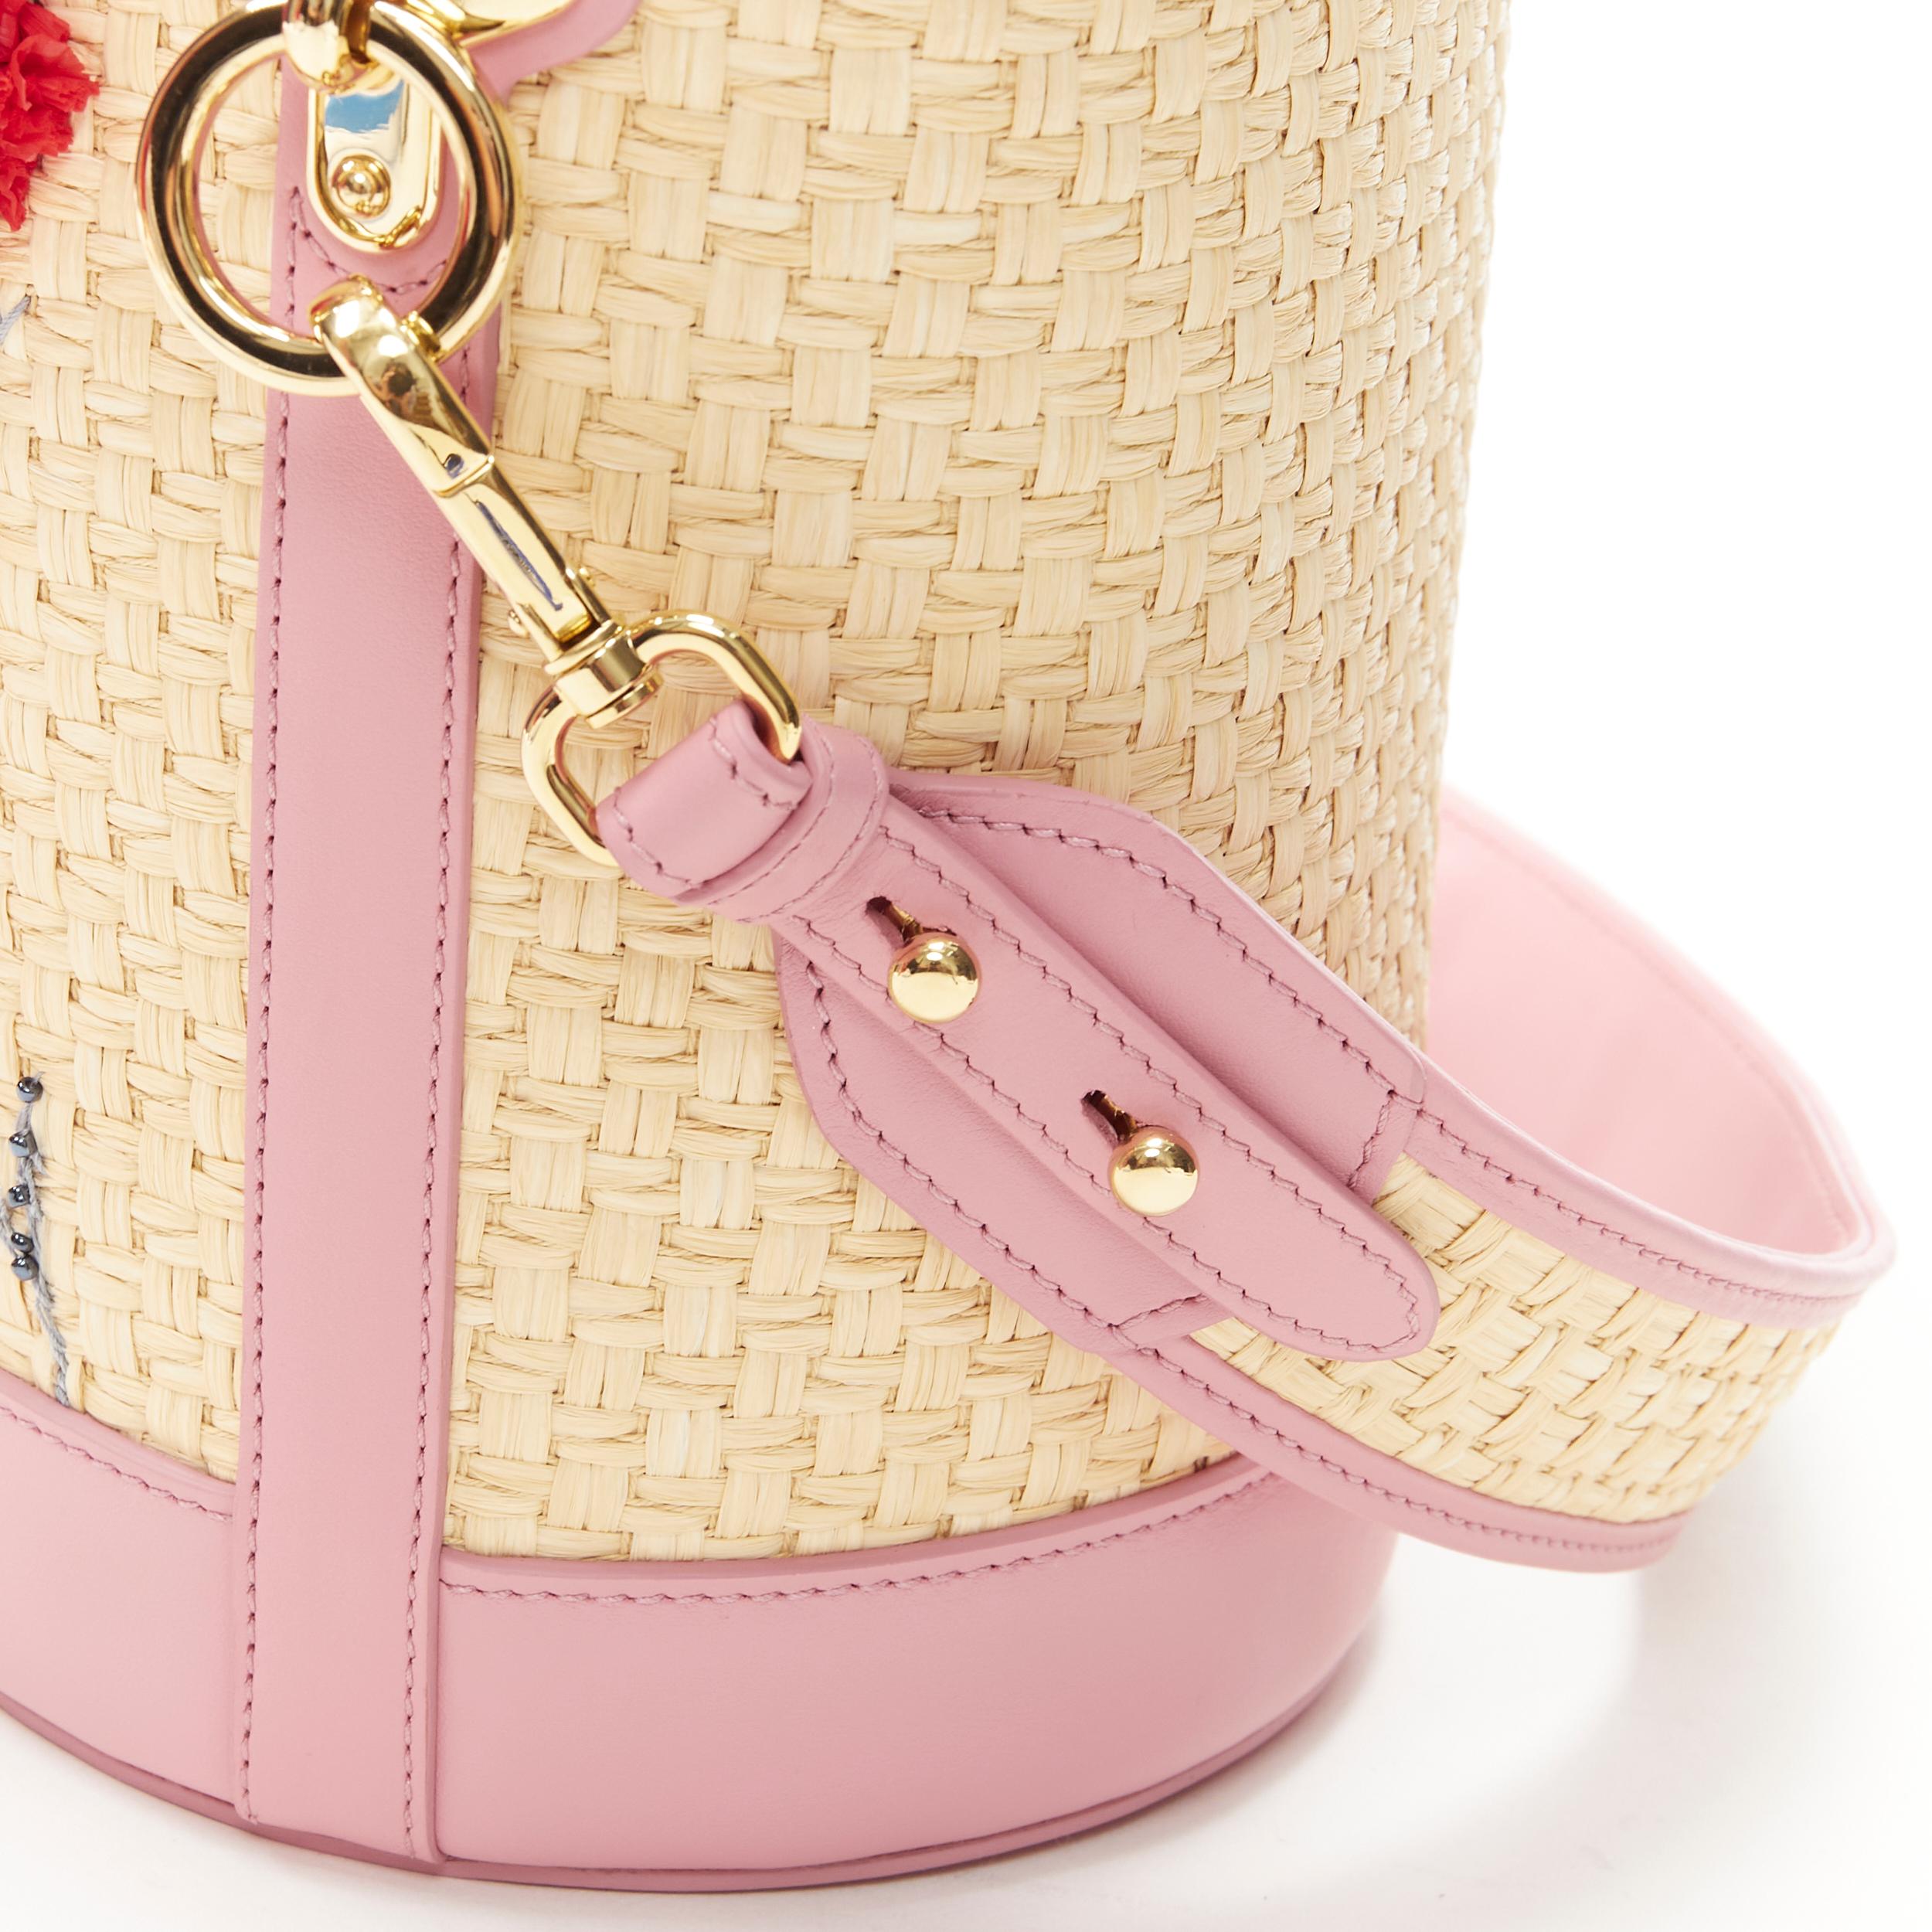 Women's new PRADA raffia woven 3D floral bead embellished pink leather bucket bag